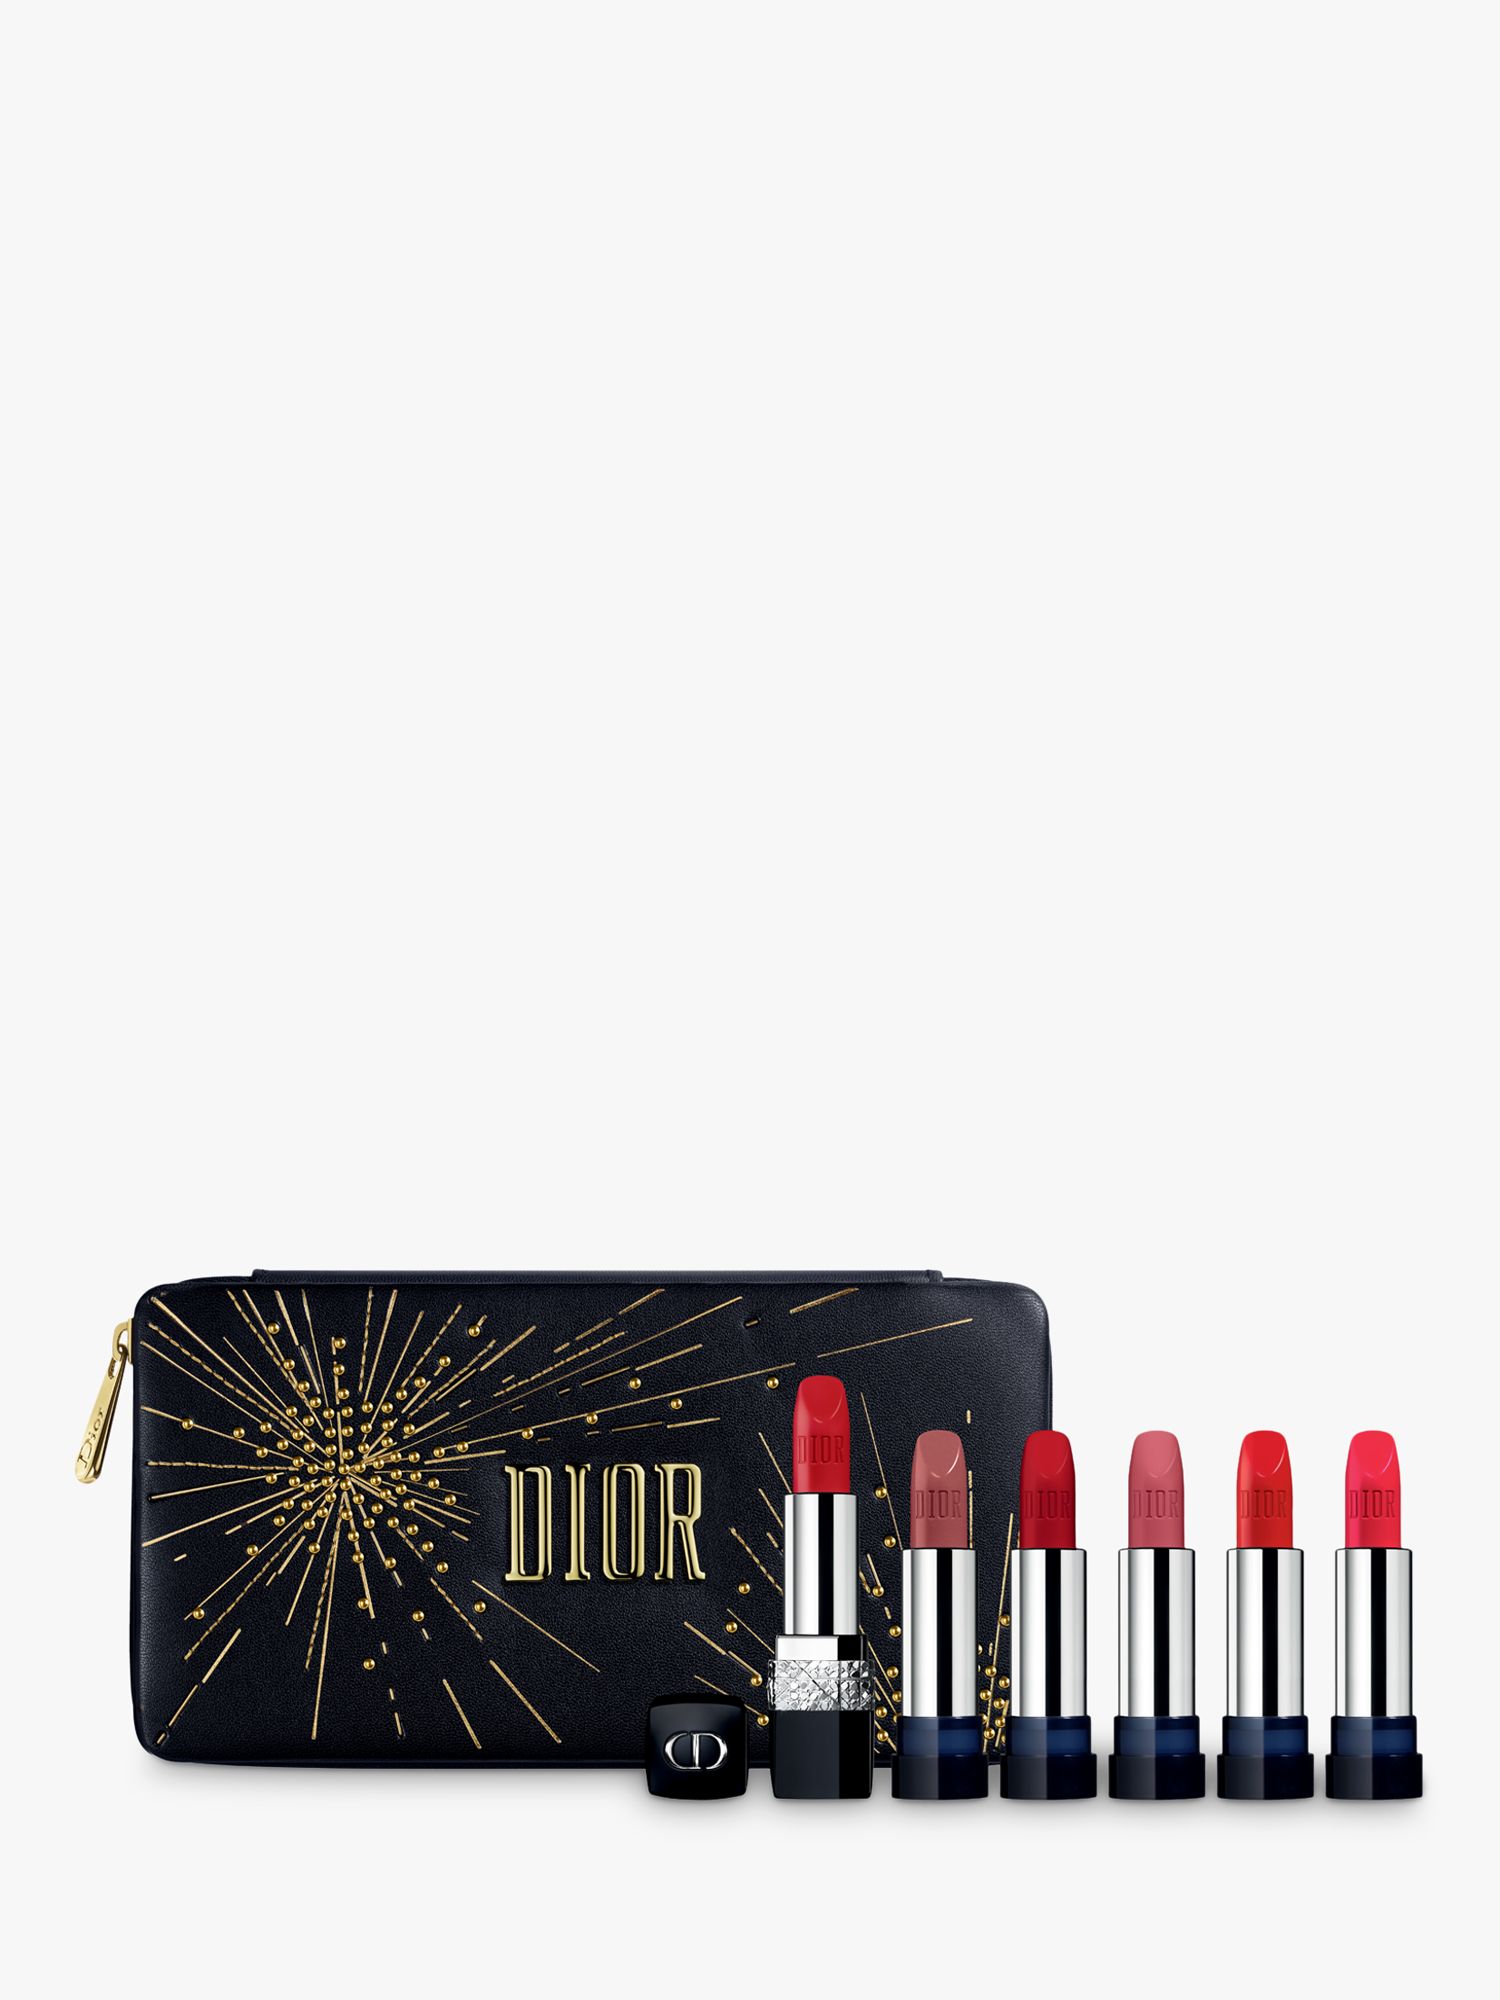 dior gift set lipstick